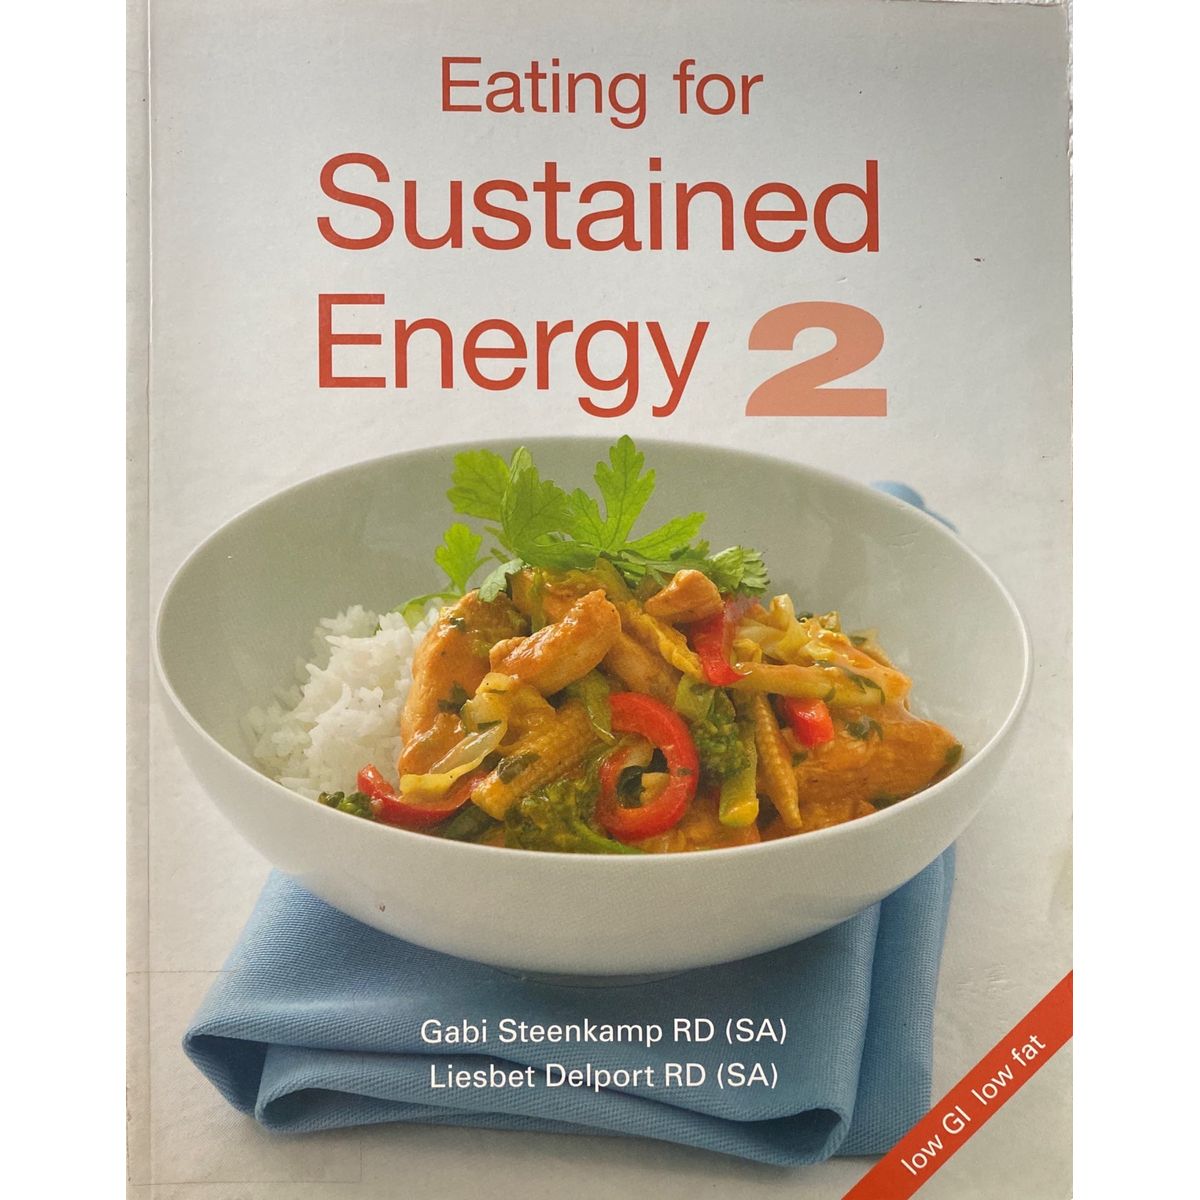 ISBN: 9780624041252 / 0624041255 - Eating For Sustained Energy 2 by Gabi Steenkamp and Liesbet Delport [2004]